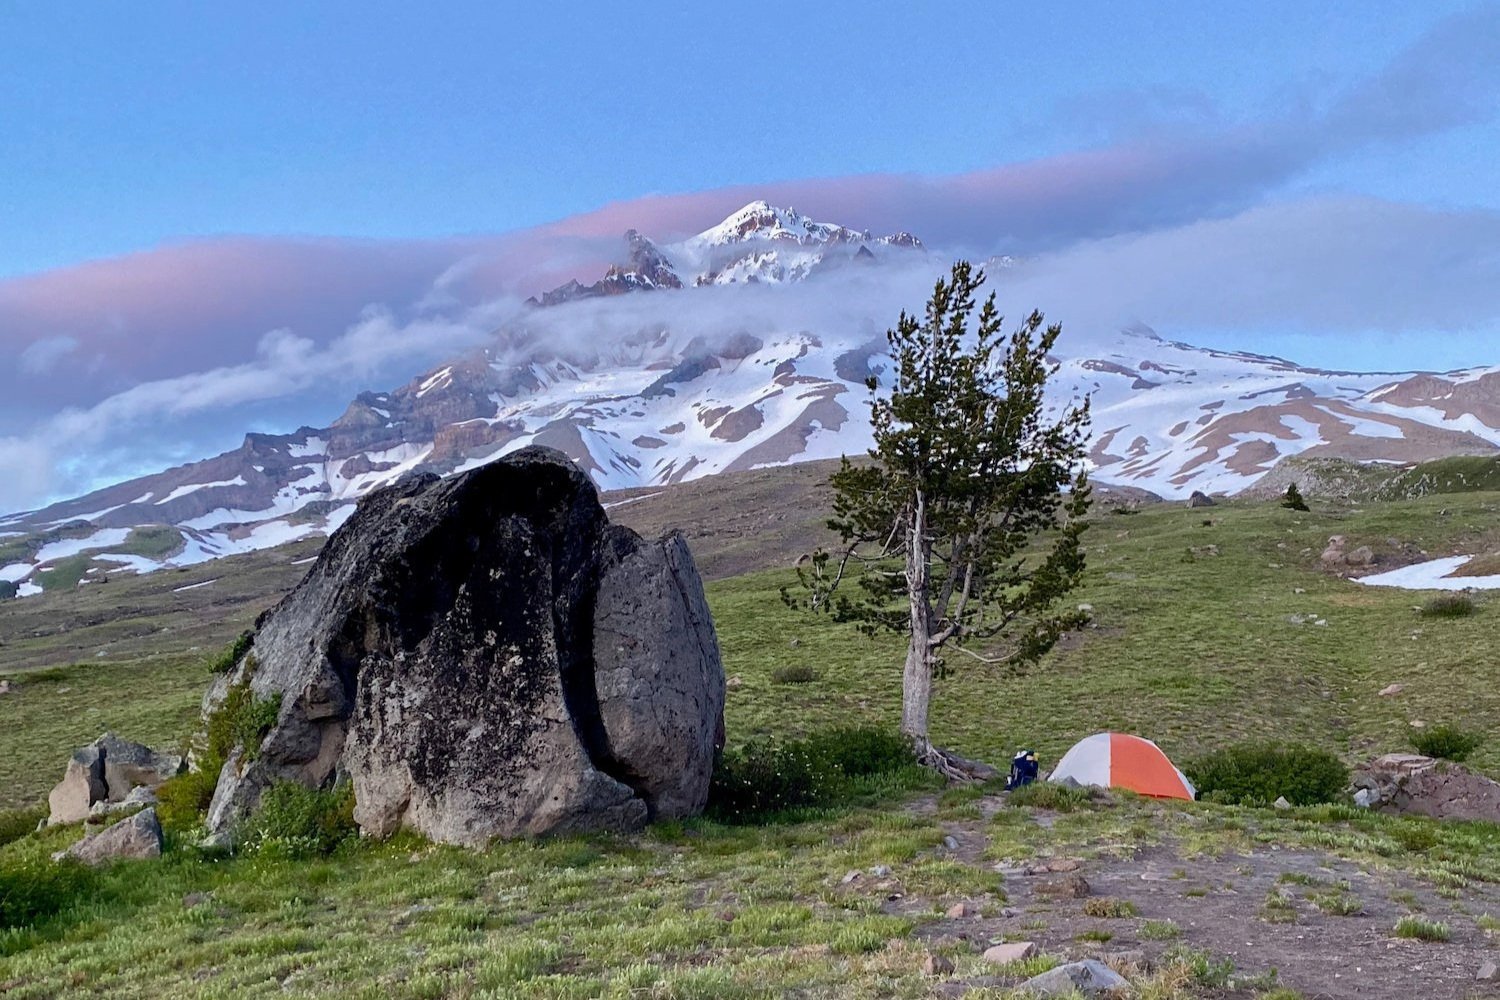 The Big Agnes Copper Spur HV UL2 backpacking tent near a giant split boulder at the base of Mt. Hood